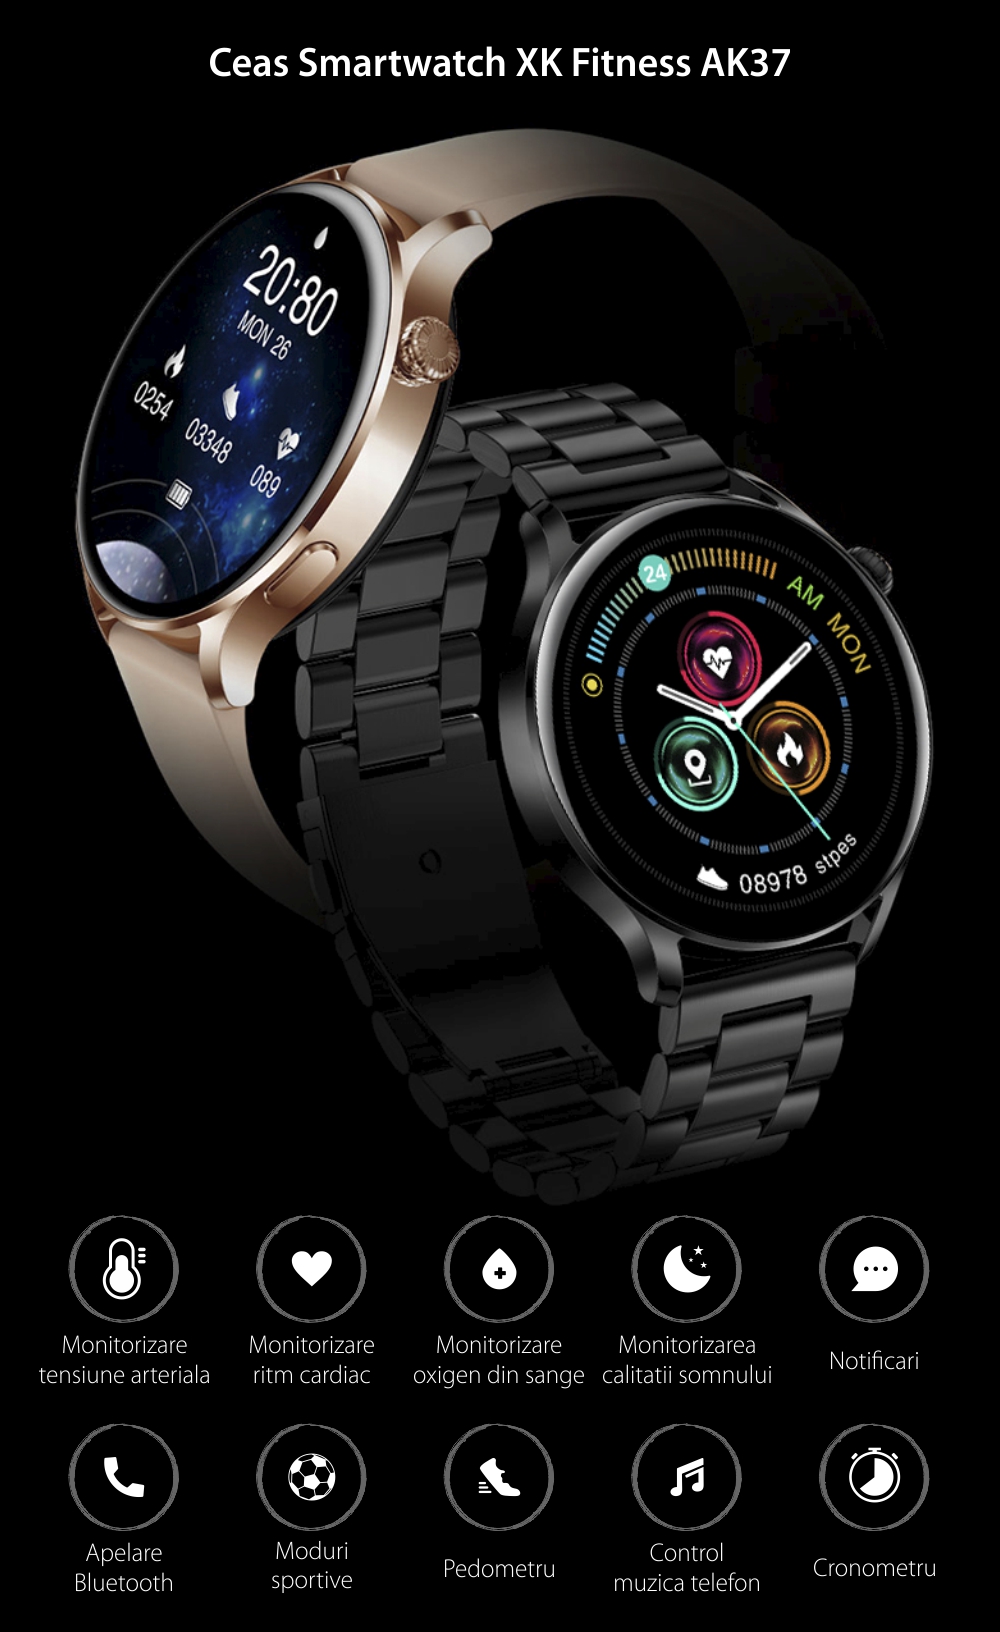 Ceas Smartwatch XK Fitness AK37 cu Functii monitorizare sanatate, Notificari, Bluetooth, Cronometru, Bratara metalica, Auriu